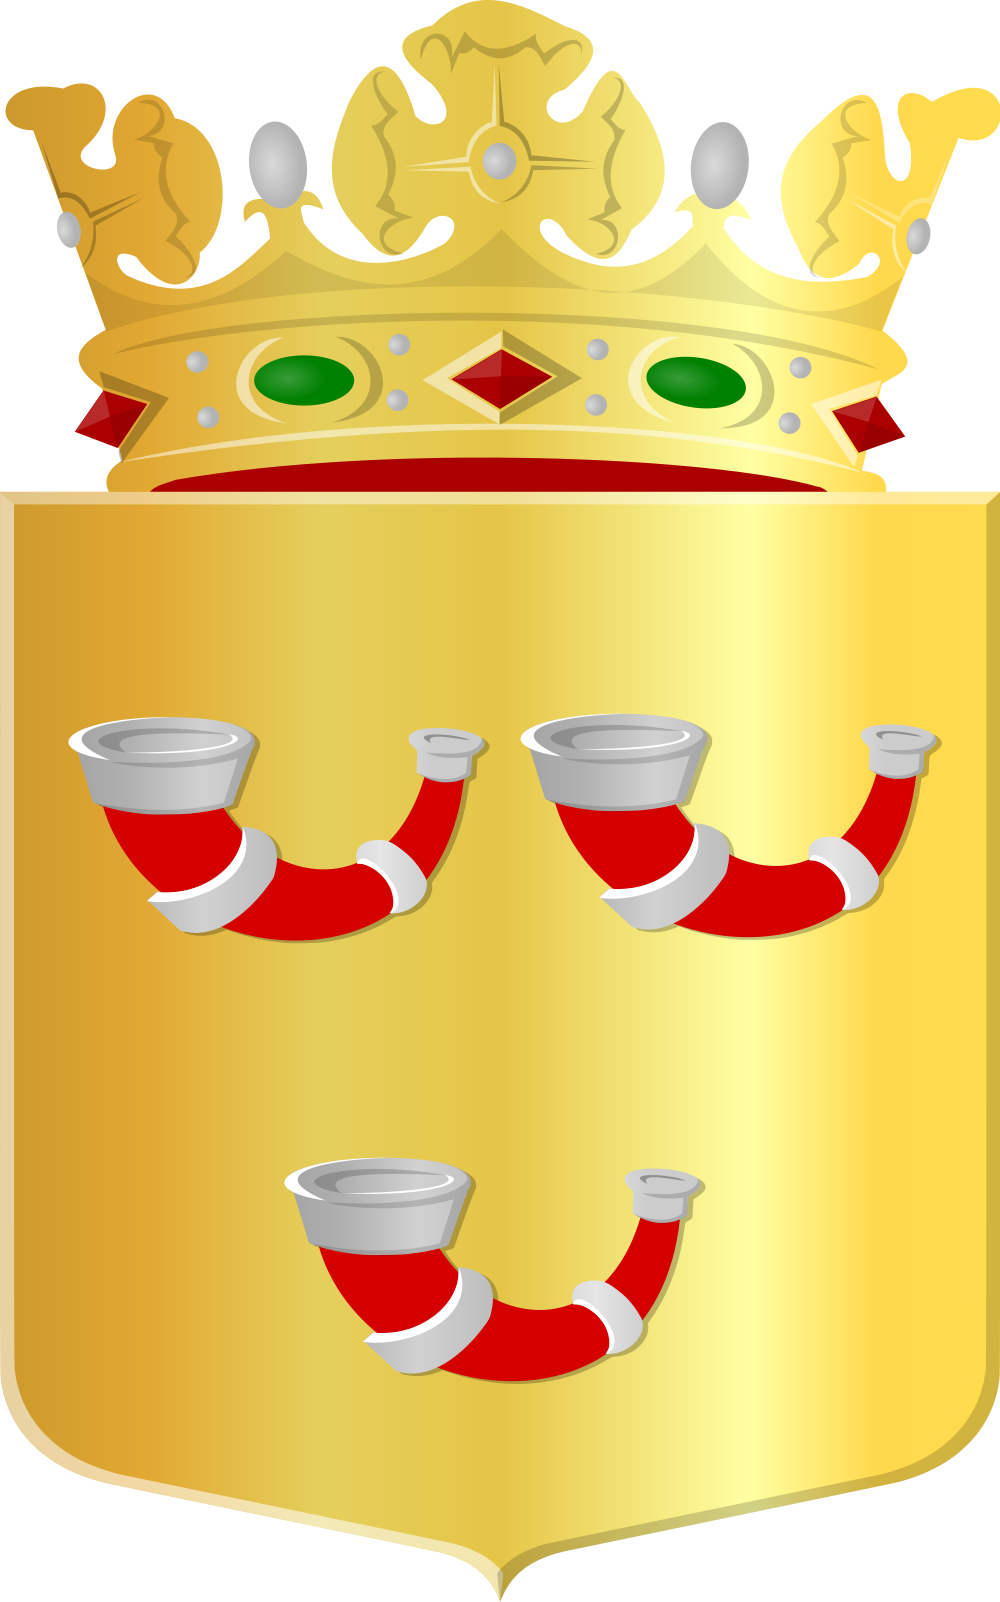 horn clipart crown